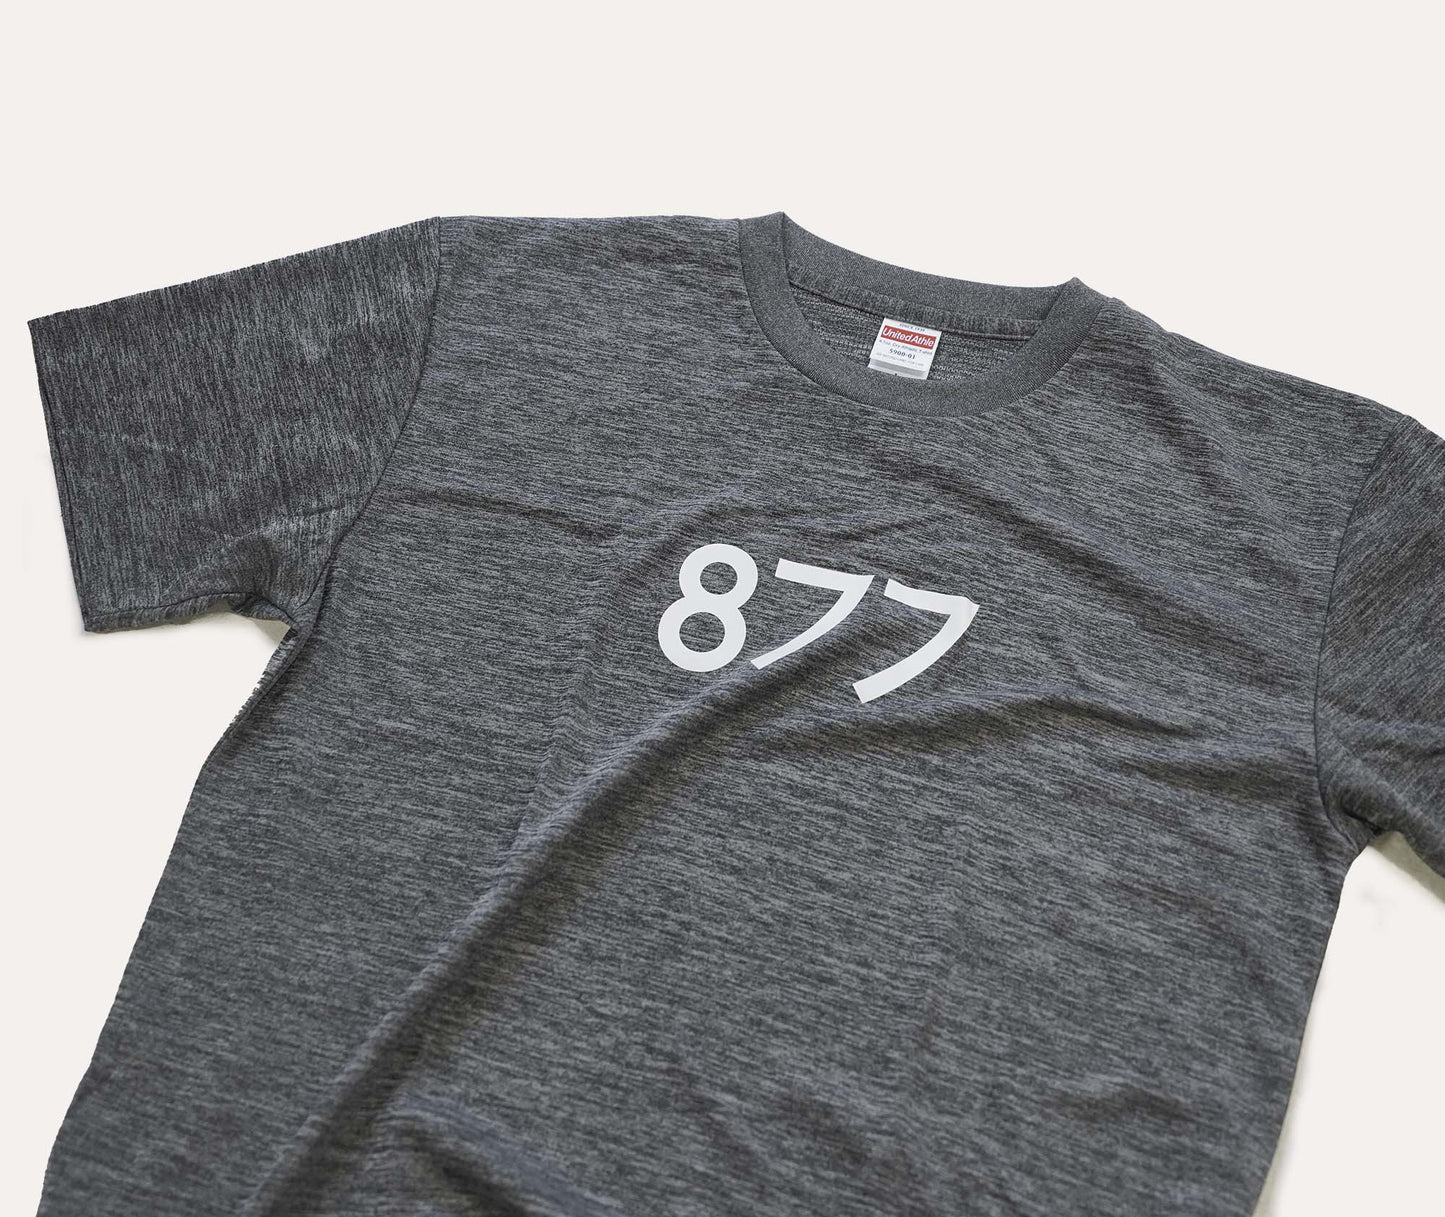 877 Dry T-shirt